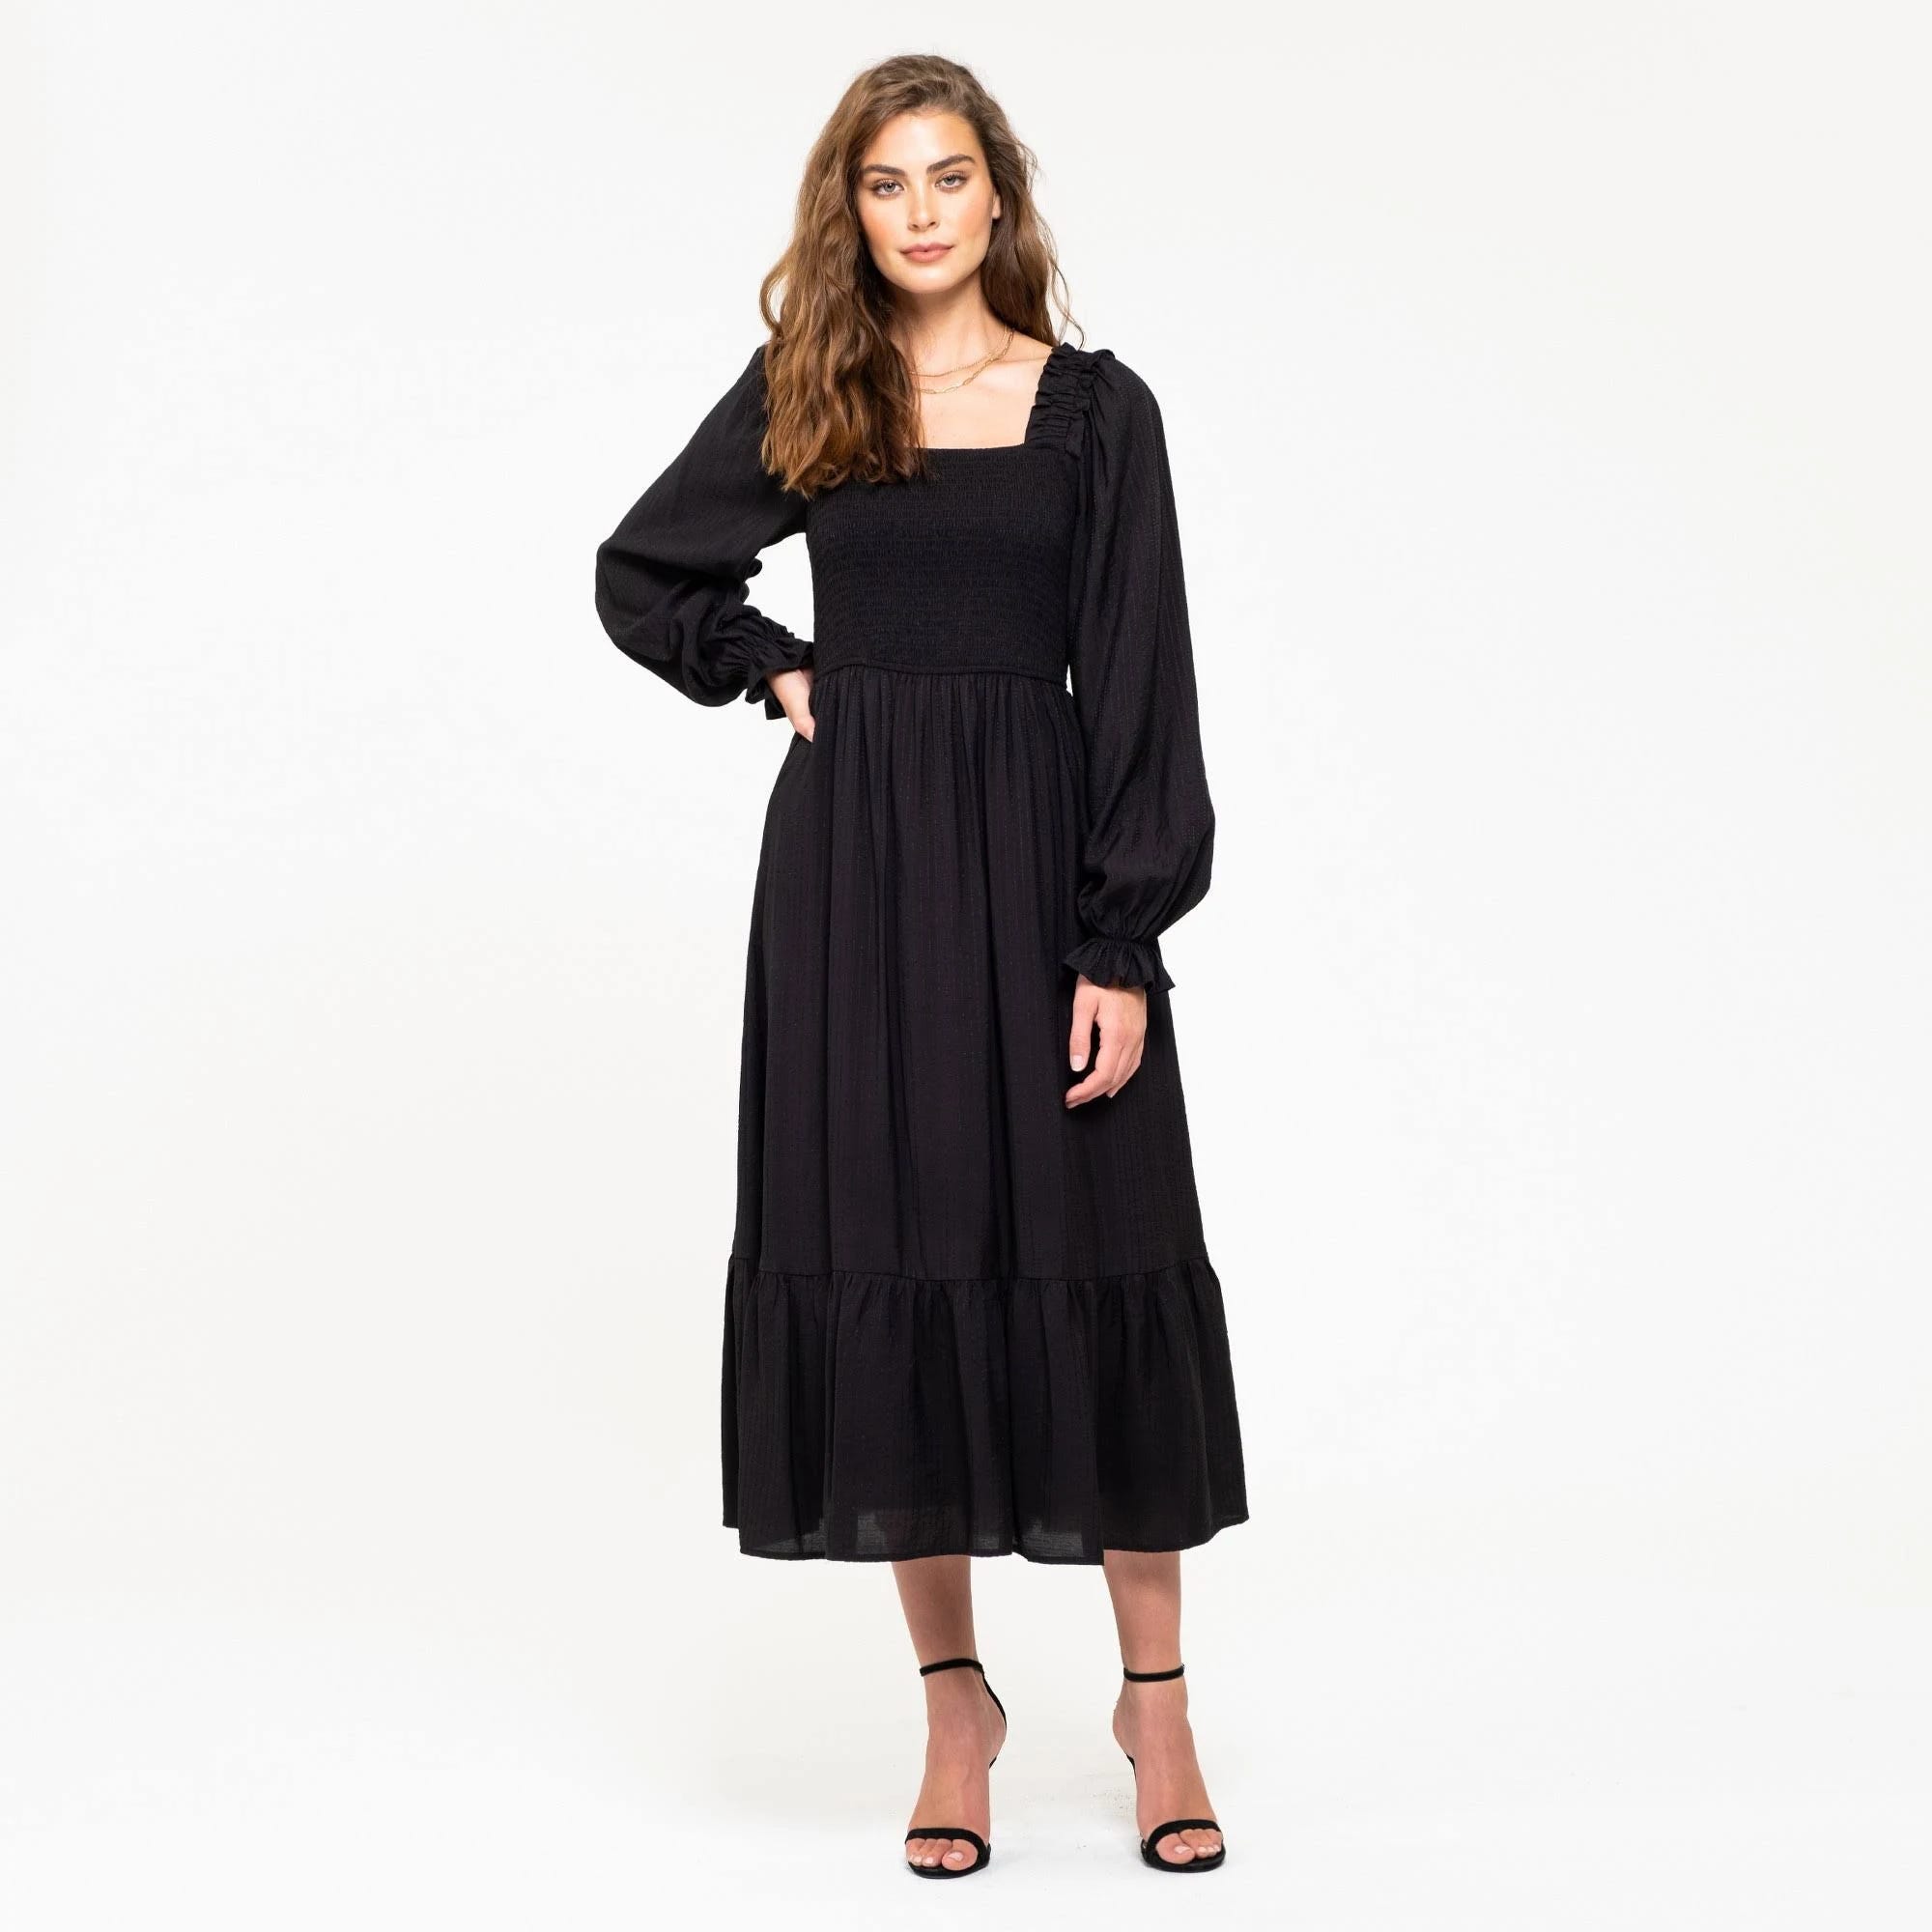 Sleeved Midi Dress for Women: Stylish and Versatile Long Sleeve Maxi Dress | Image